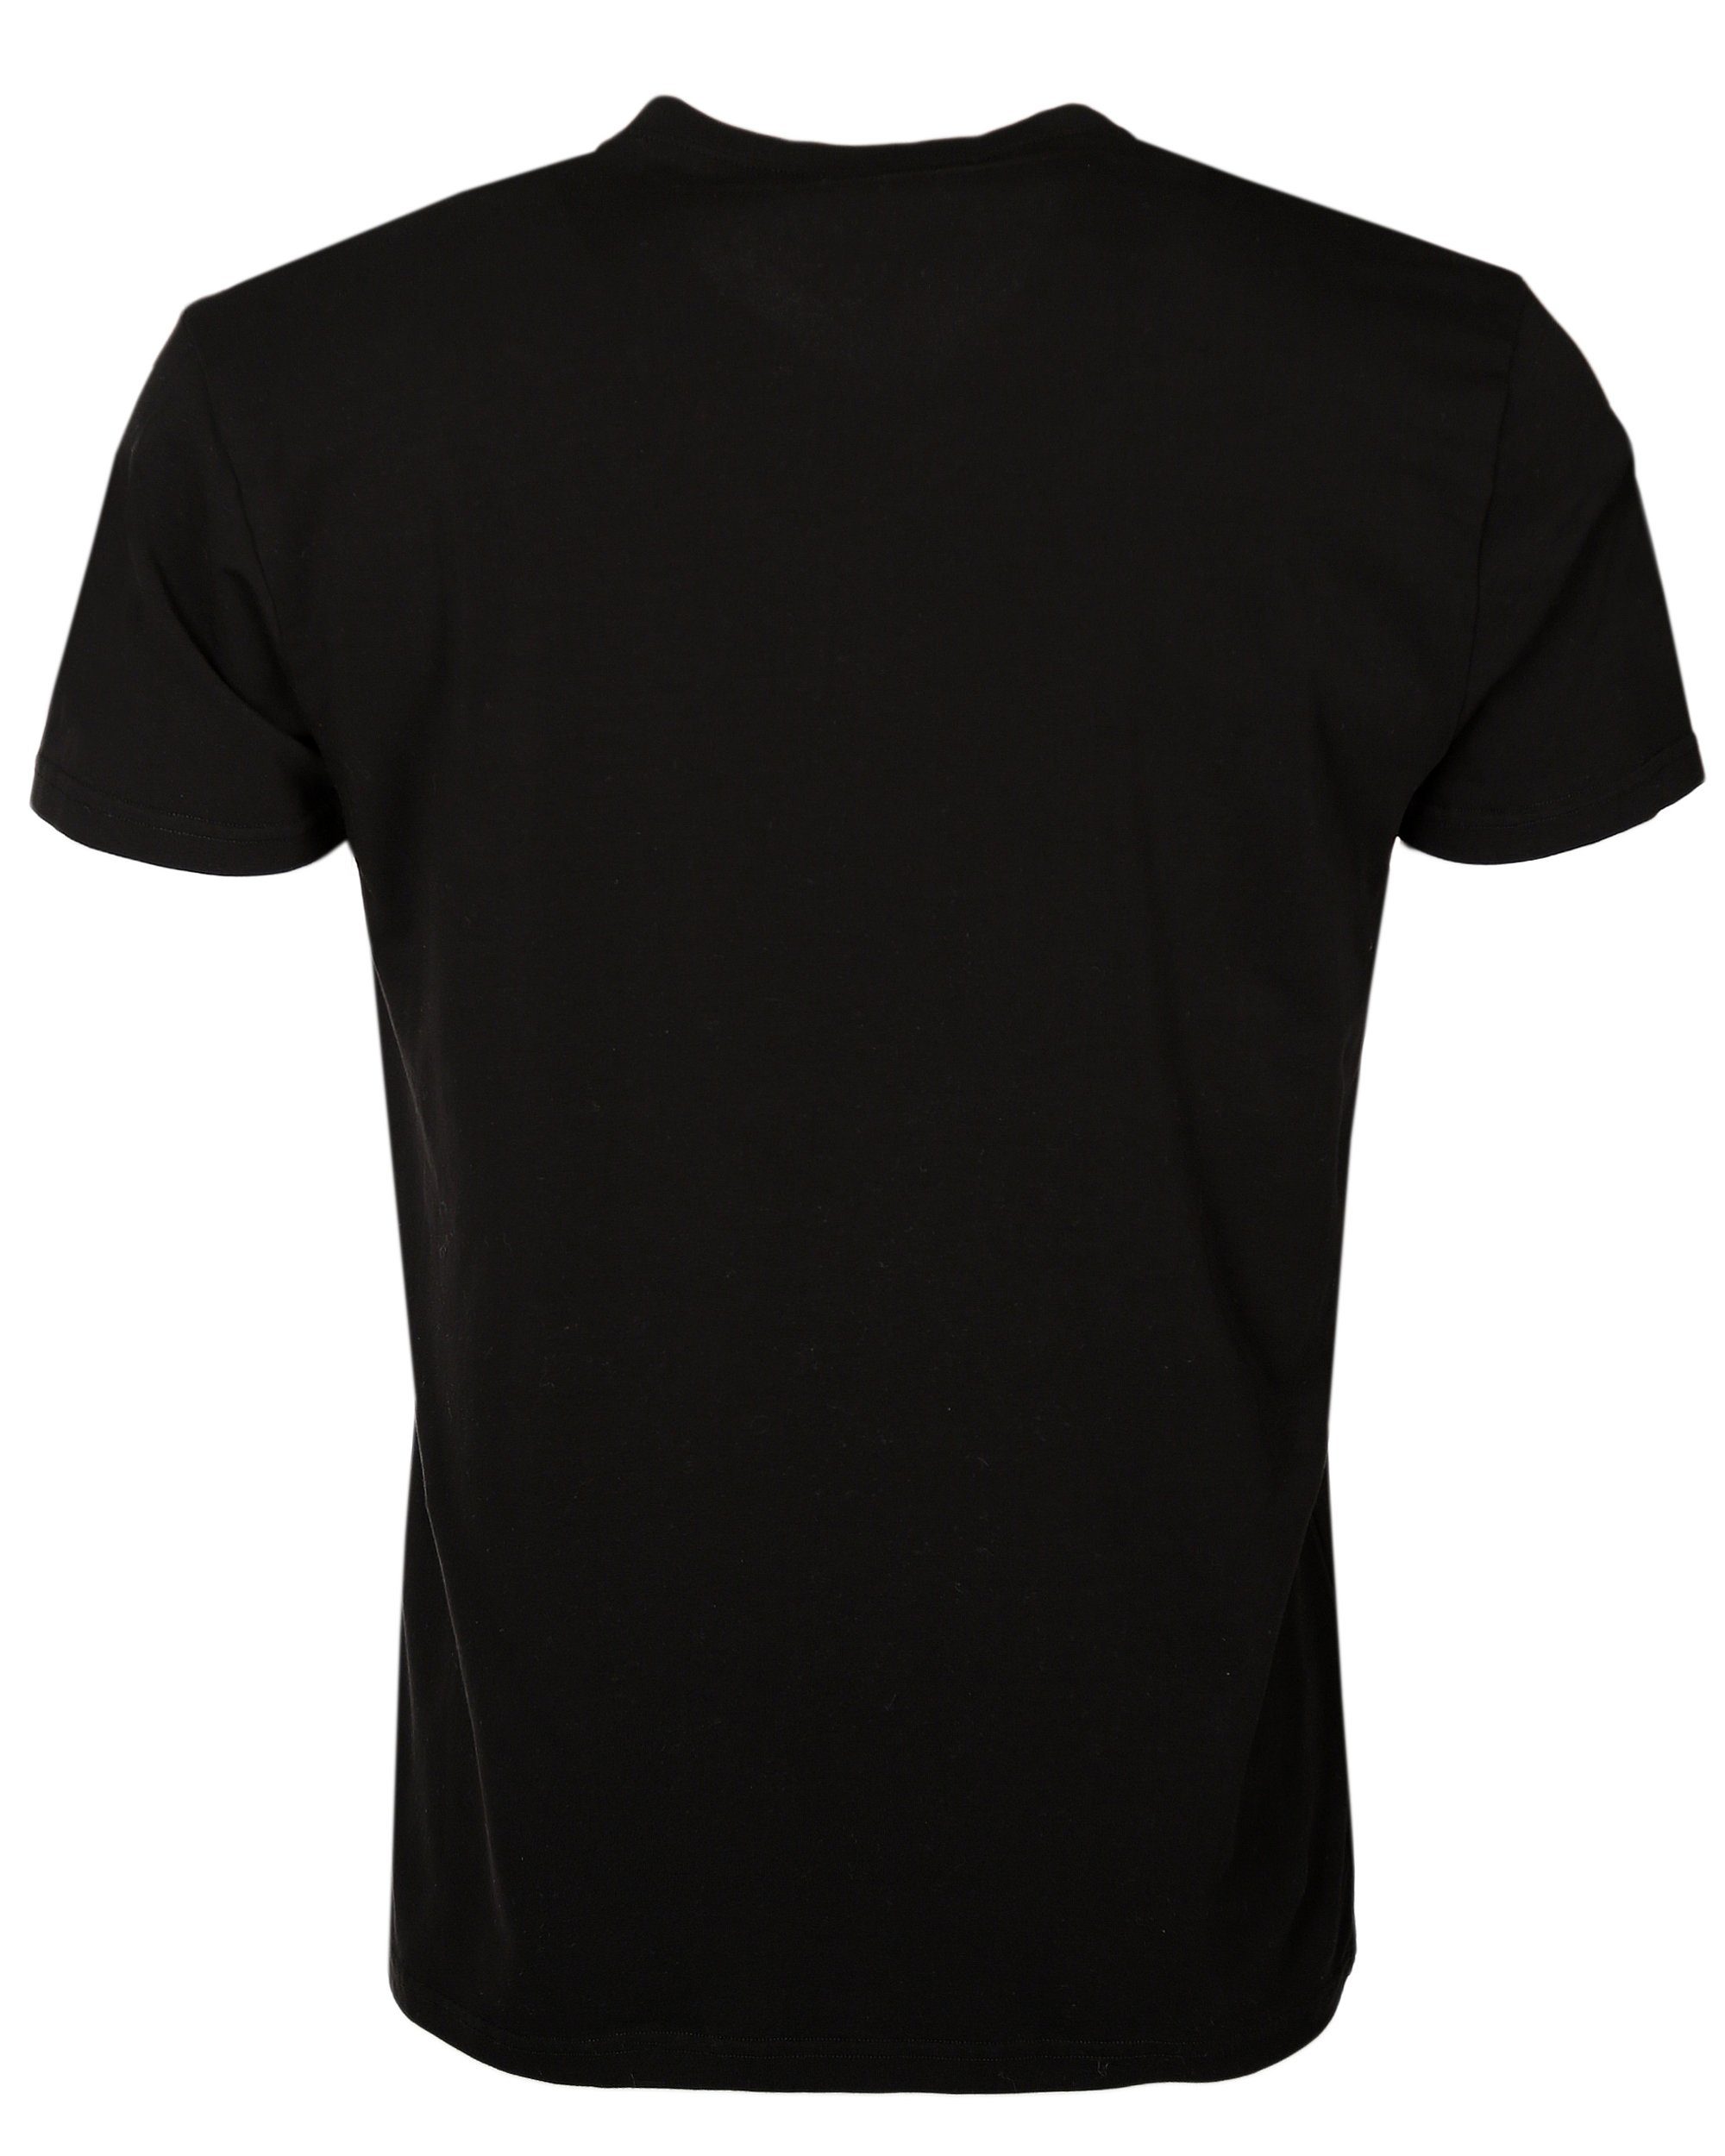 TOP GUN Cloudy T-Shirt black TG20191006